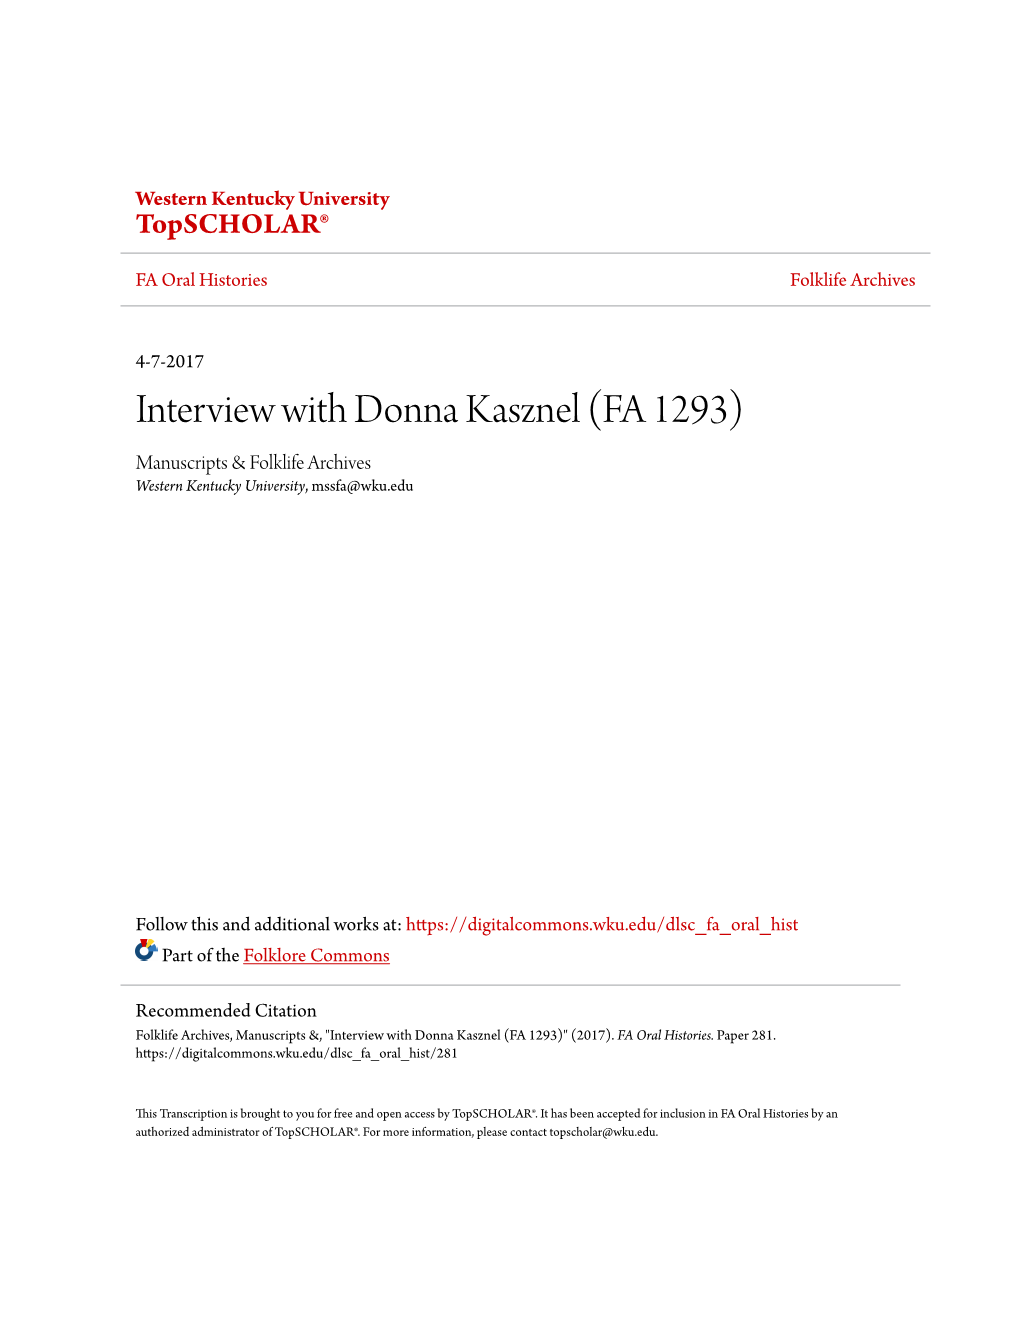 Interview with Donna Kasznel (FA 1293) Manuscripts & Folklife Archives Western Kentucky University, Mssfa@Wku.Edu